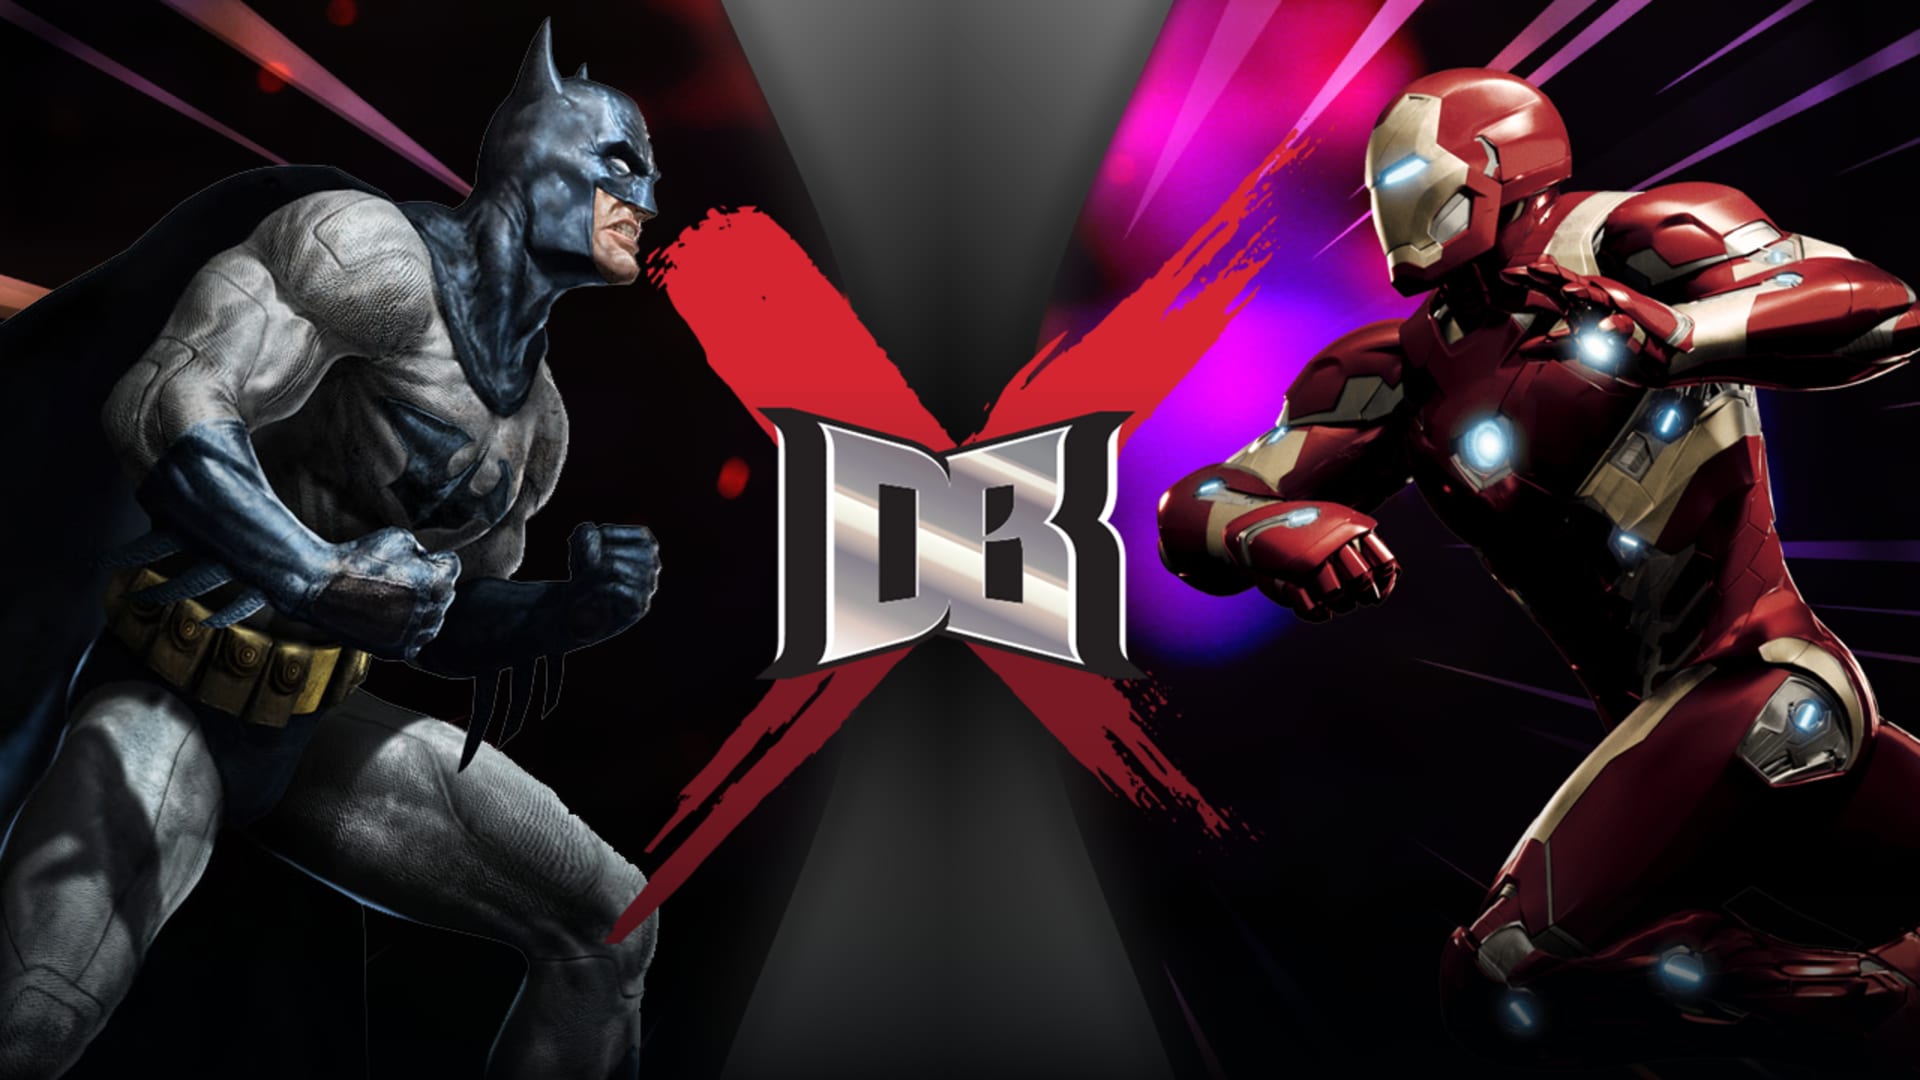 Batman VS Iron Man (DC VS Marvel) - Rooster Teeth